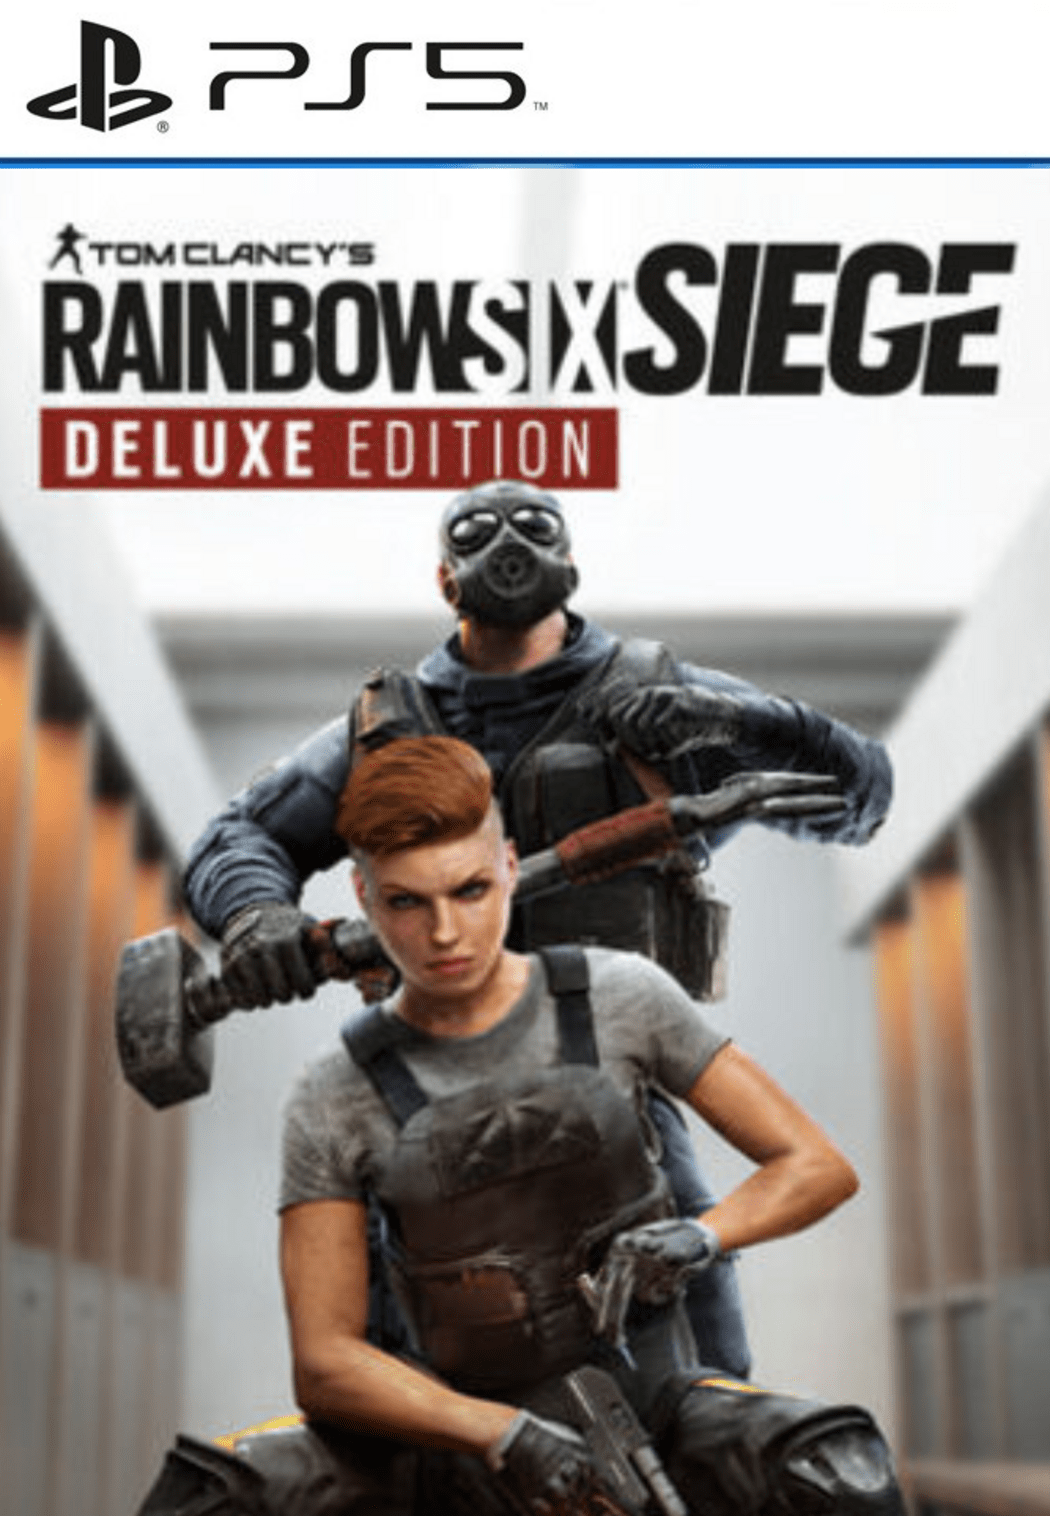 PSN price | Deluxe Tom Buy Six: Edition Rainbow Siege Cheap ENEBA Clancy\'s key!